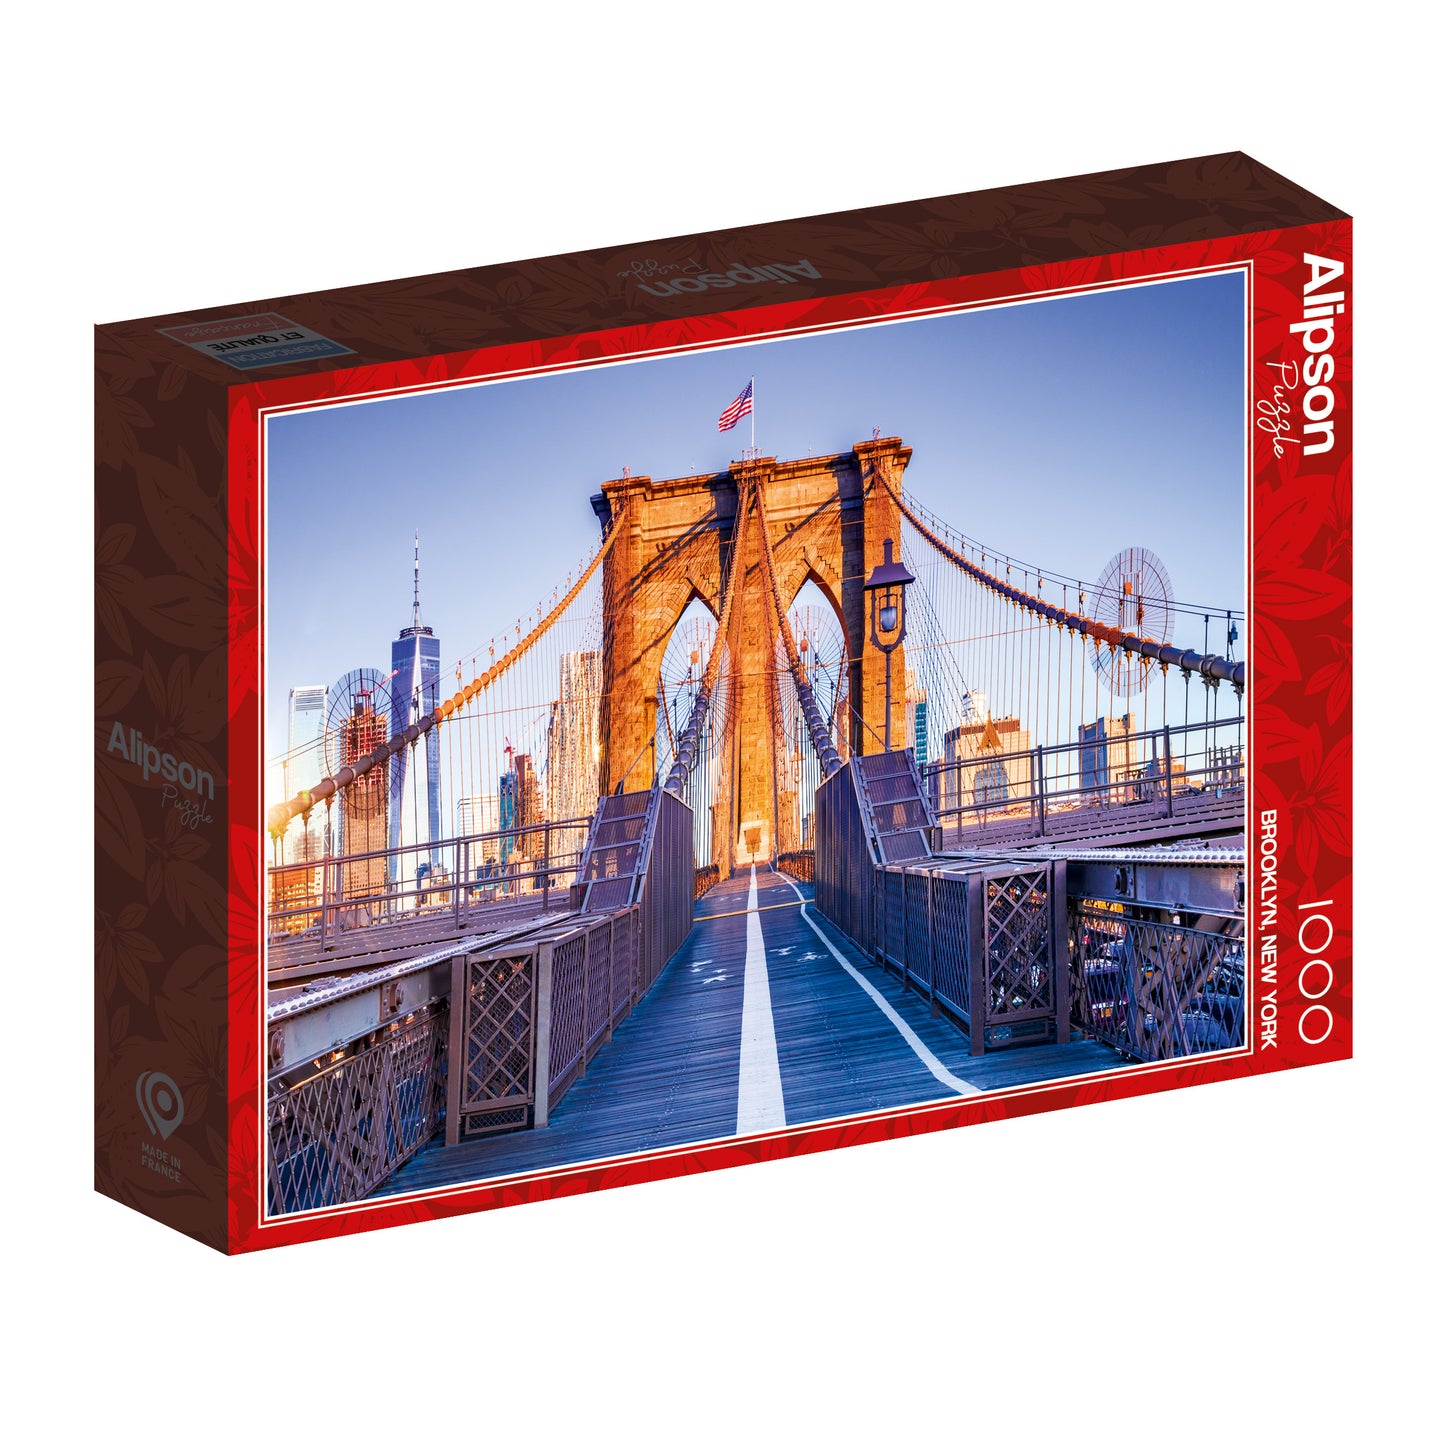 Alipson - Brooklyn, New York - 1000 Piece Jigsaw Puzzle